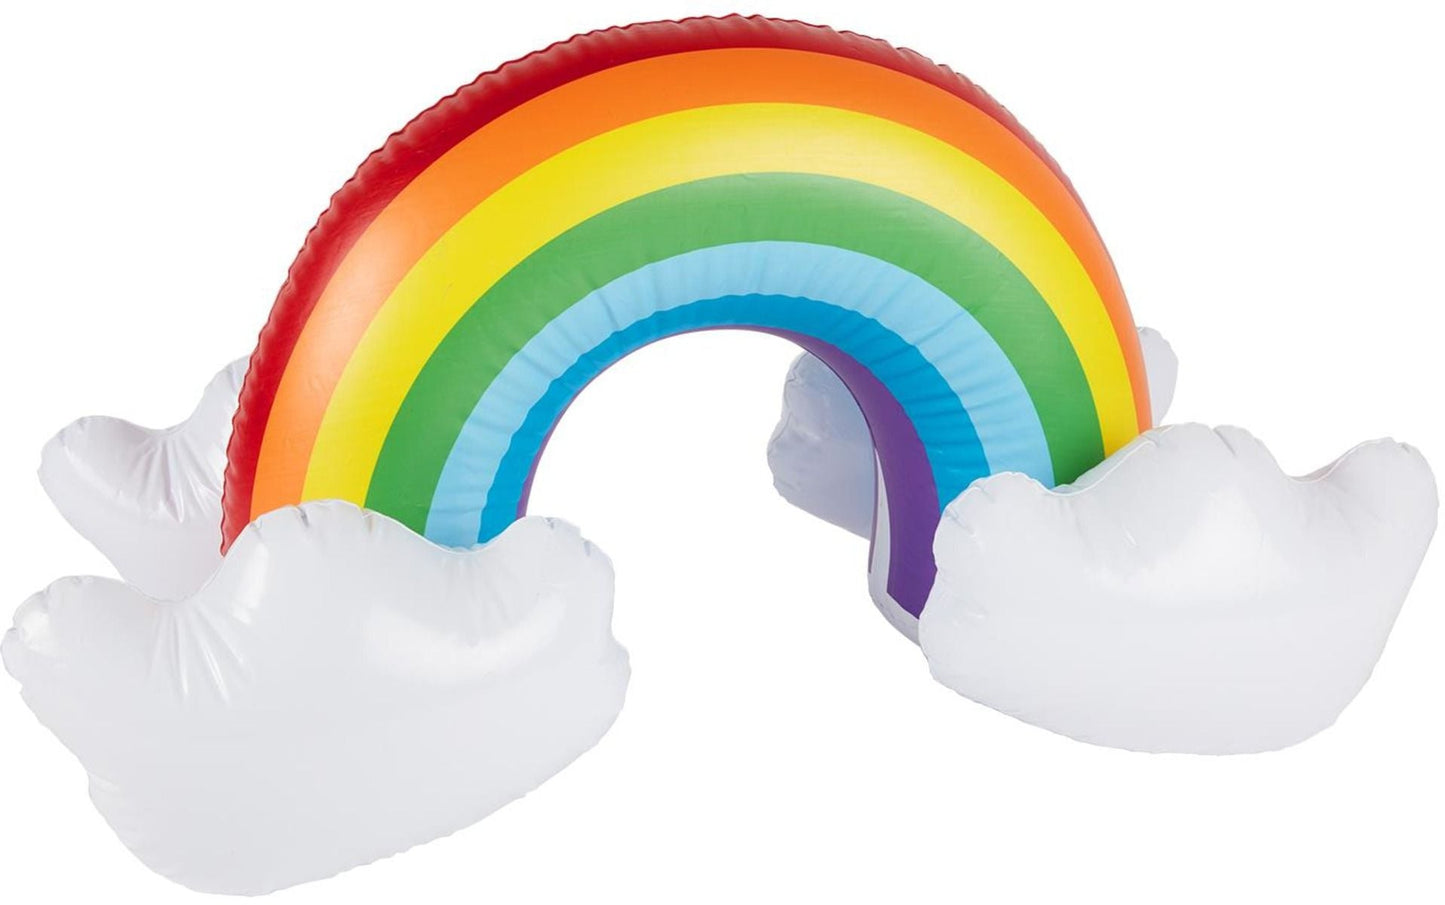 Inflatable Rainbow